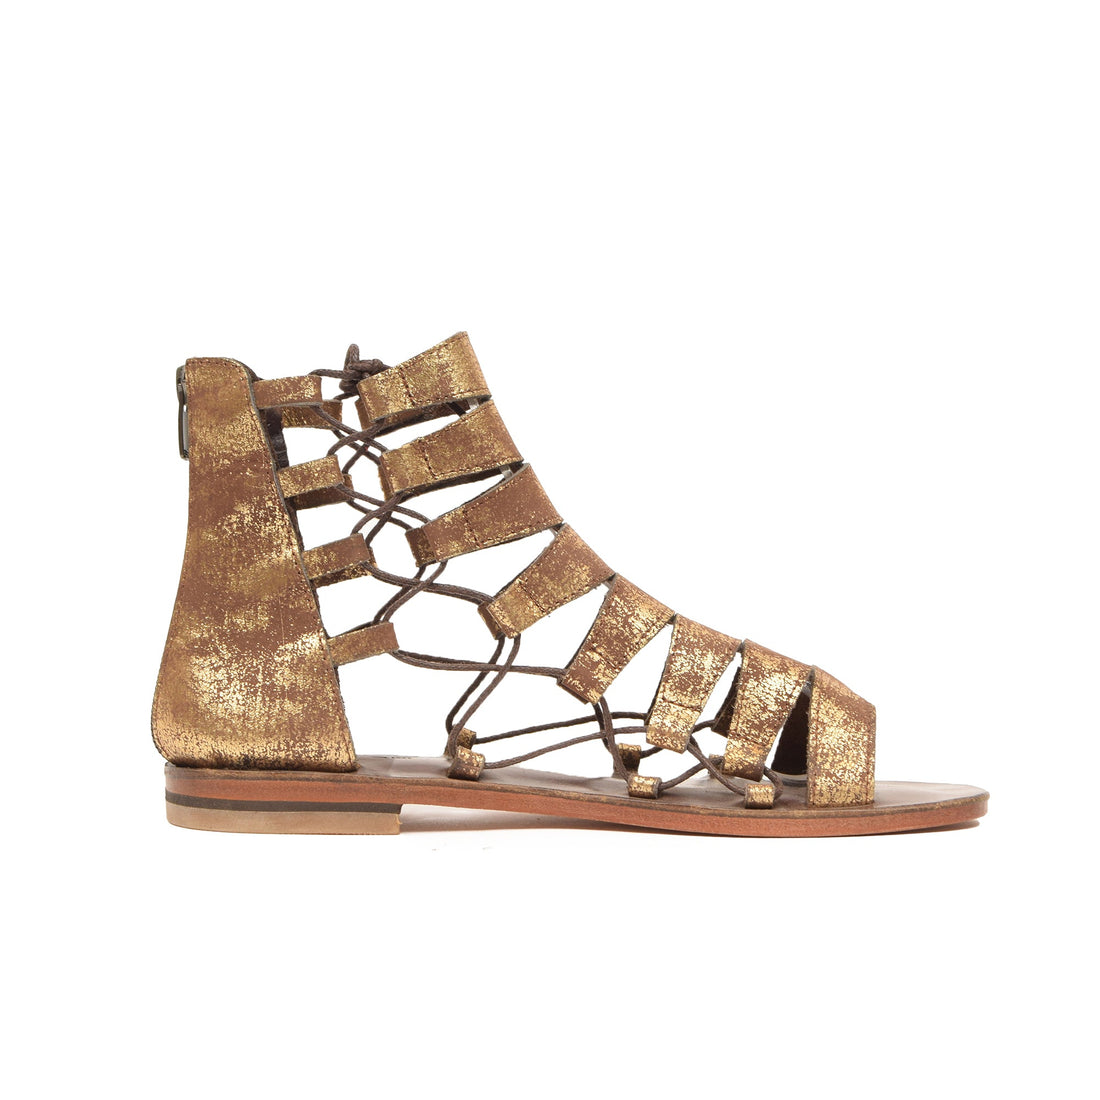 Hestia Gold Leather Women’s Sandals - Handmade Flat Sandal, Low Heel Strapped Travel Comfortable Sandal